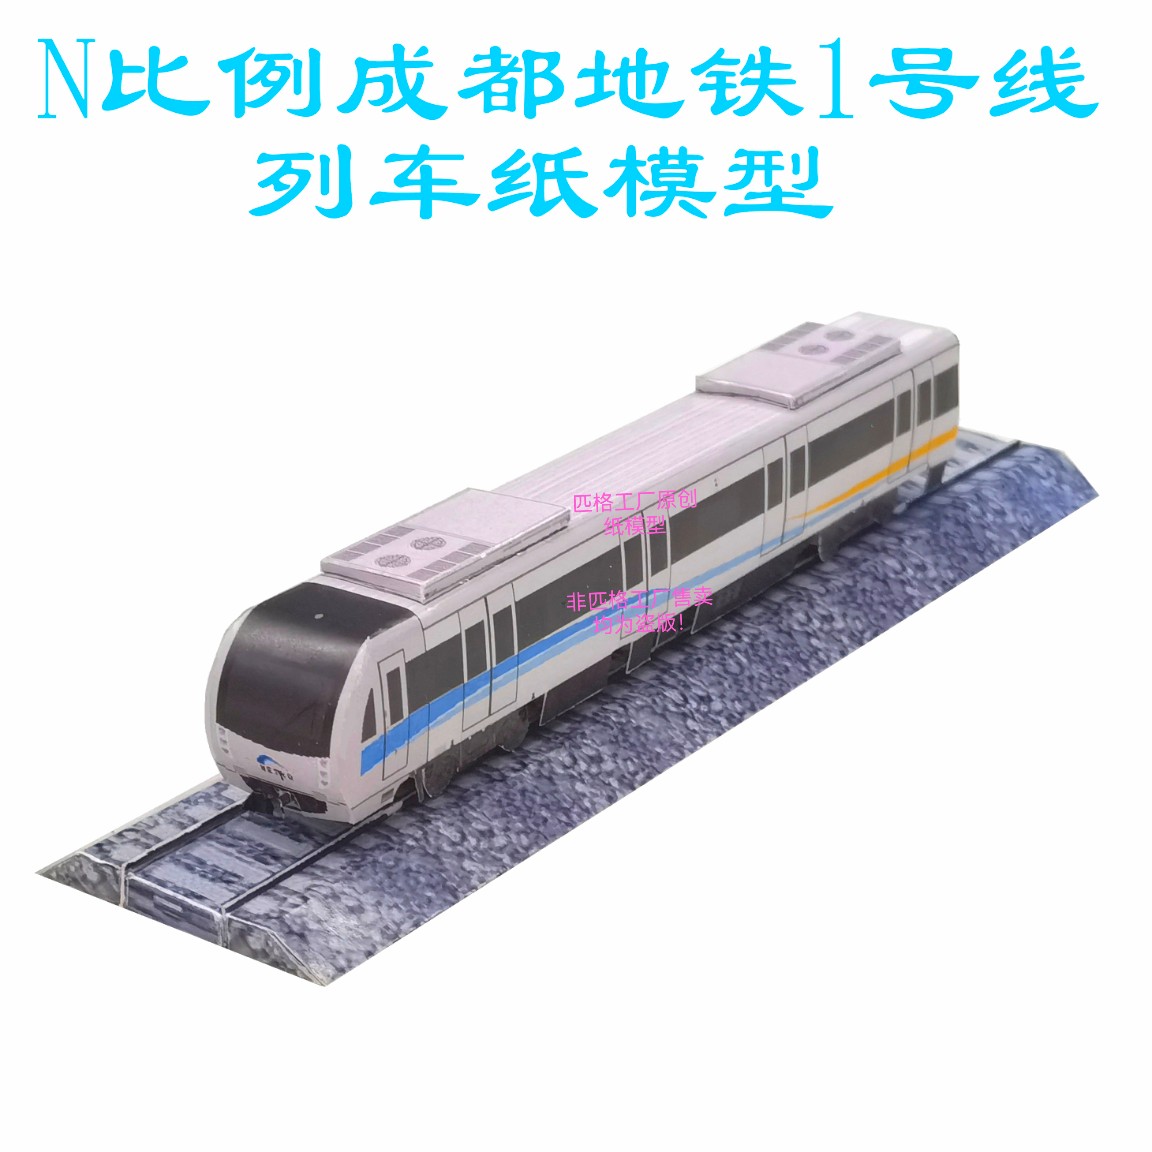 N比例成都地铁1号线列车模型3D纸模型DIY手工火车高铁地铁模型